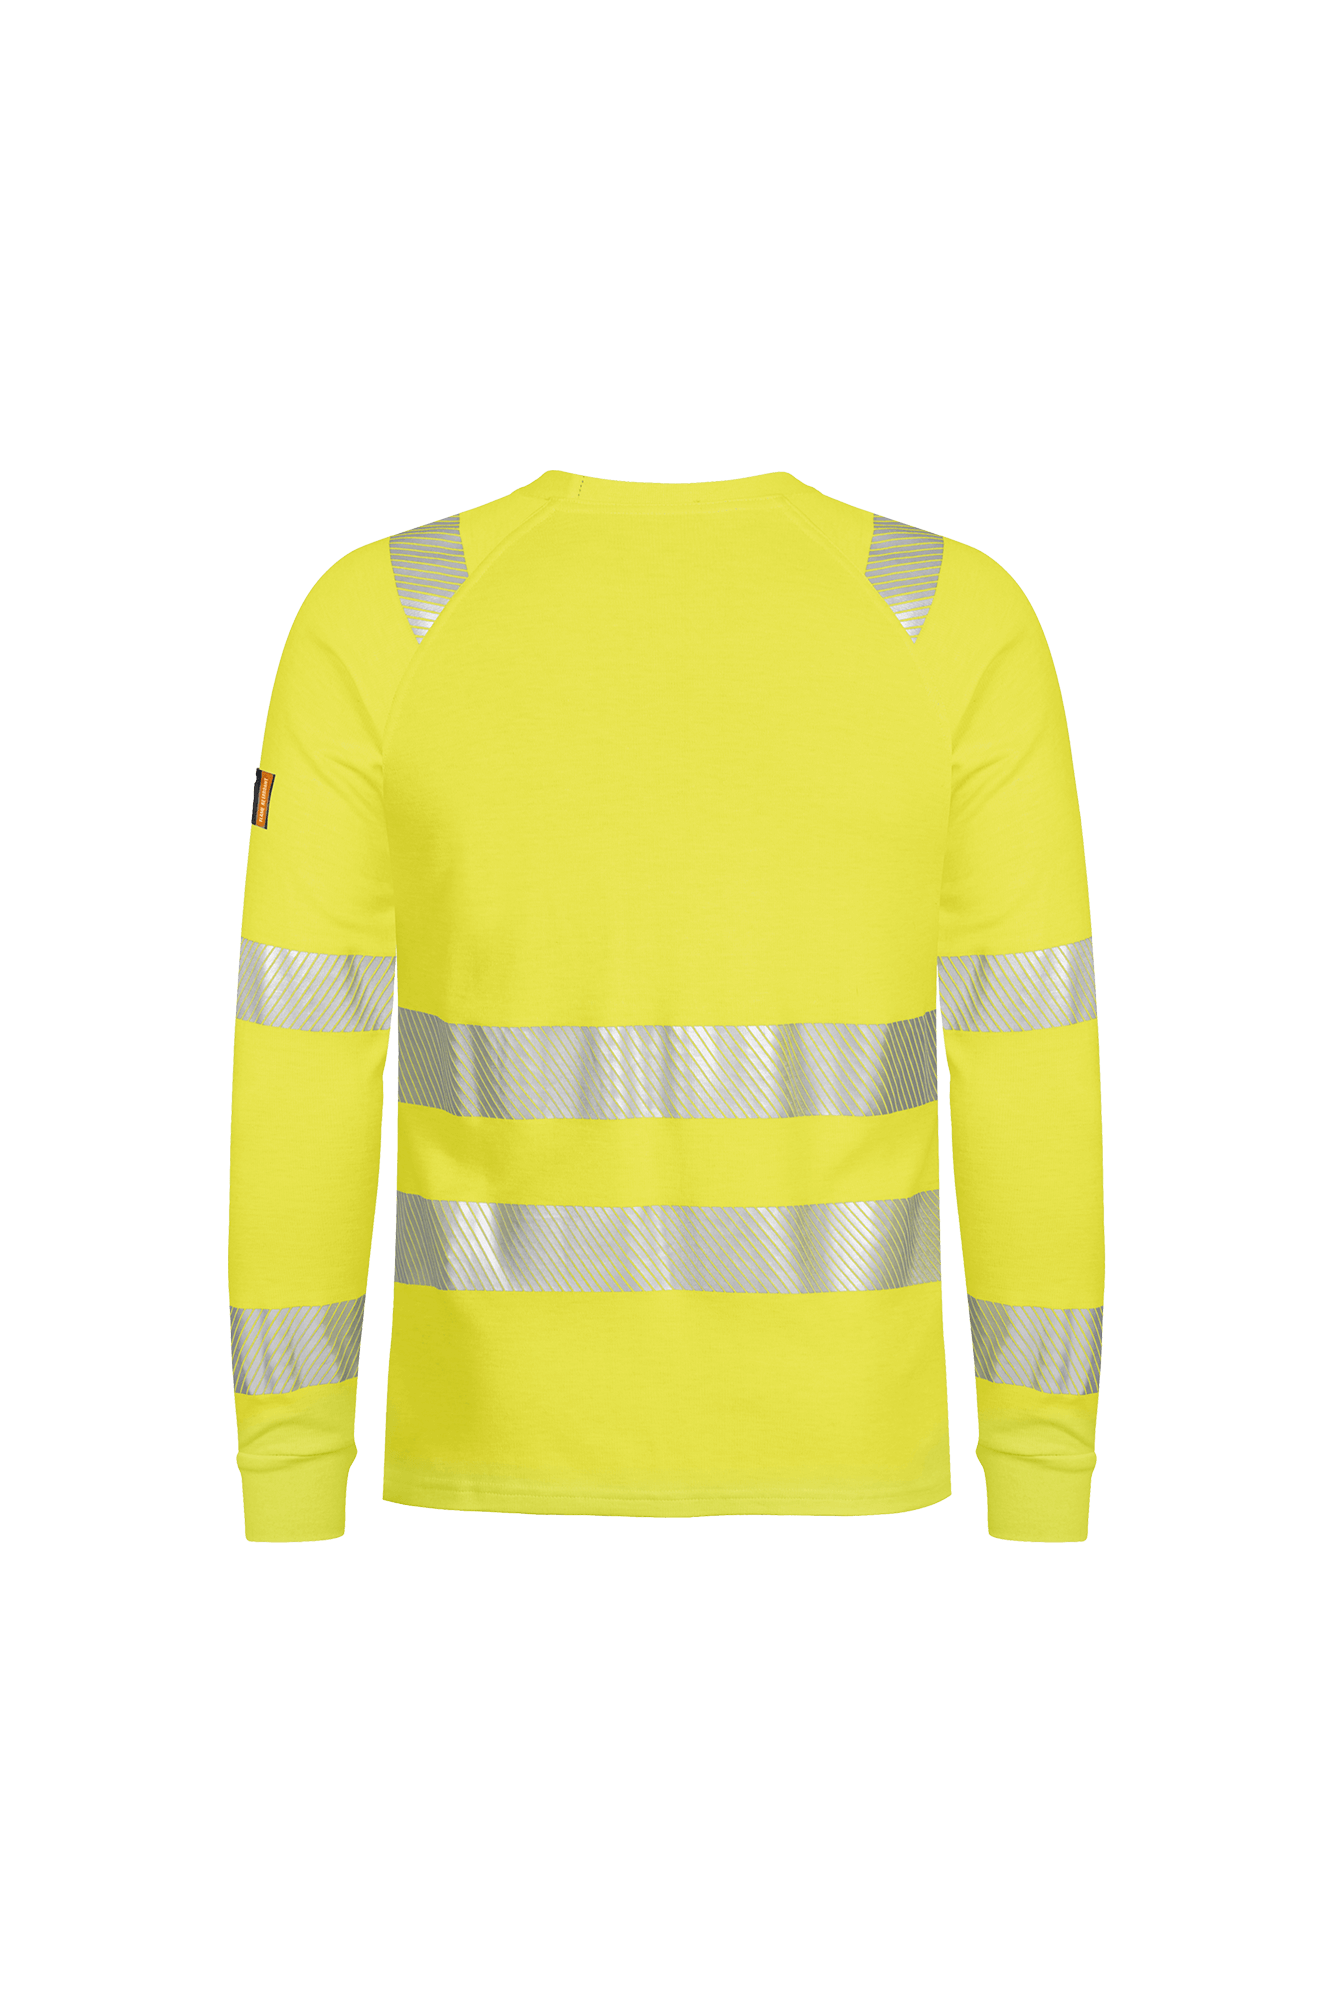 flammehæmmende t-shirt, Hi-vis gul klasse 3, 508486, ryg